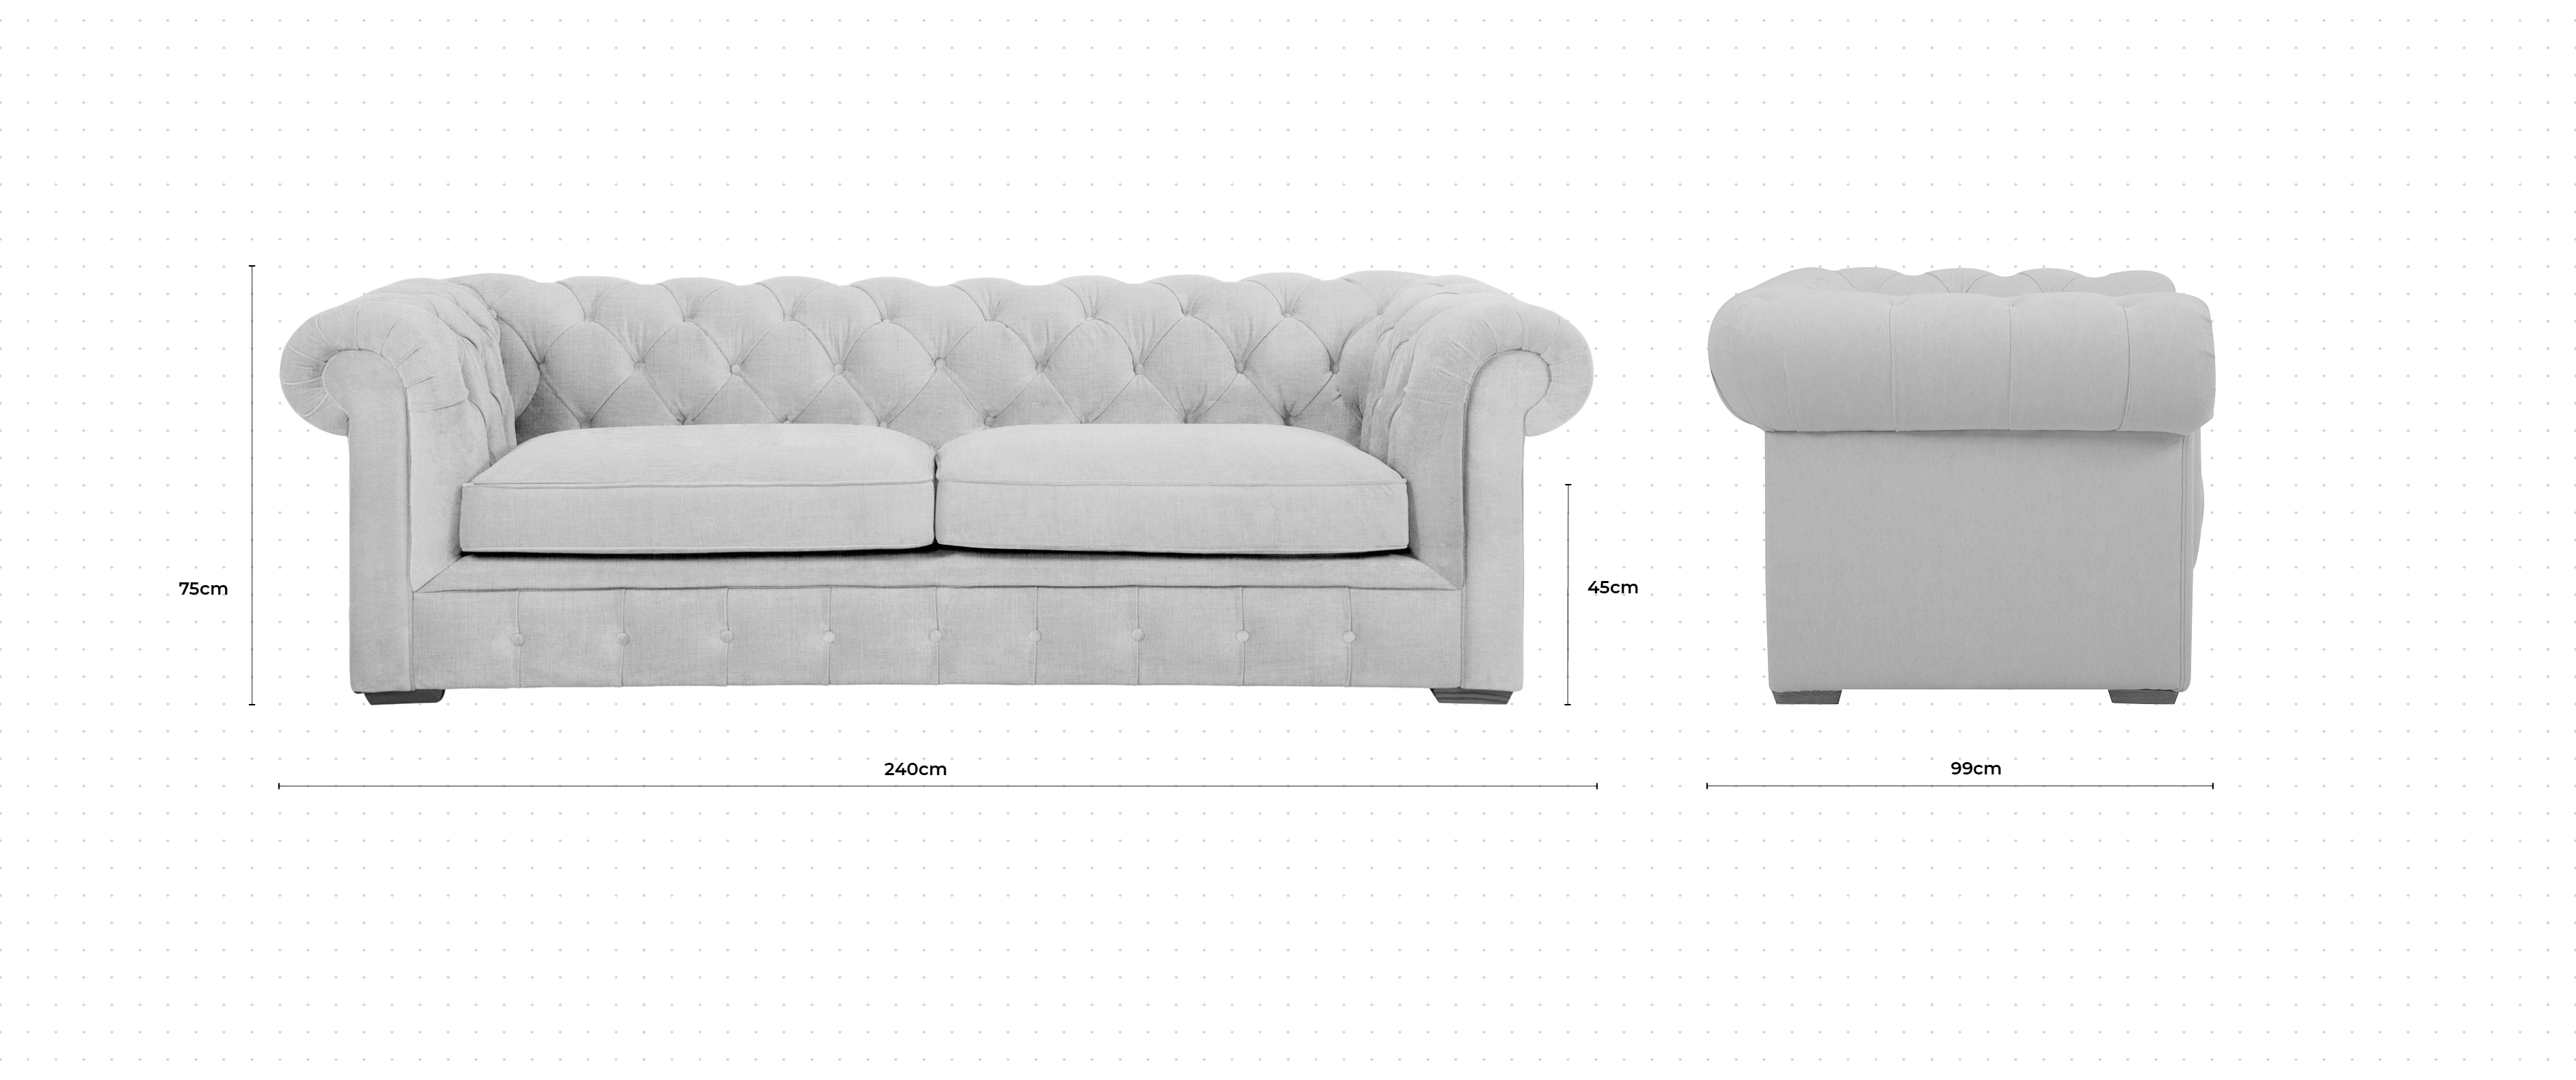 Gainsborough 3 Seater Sofa dimensions